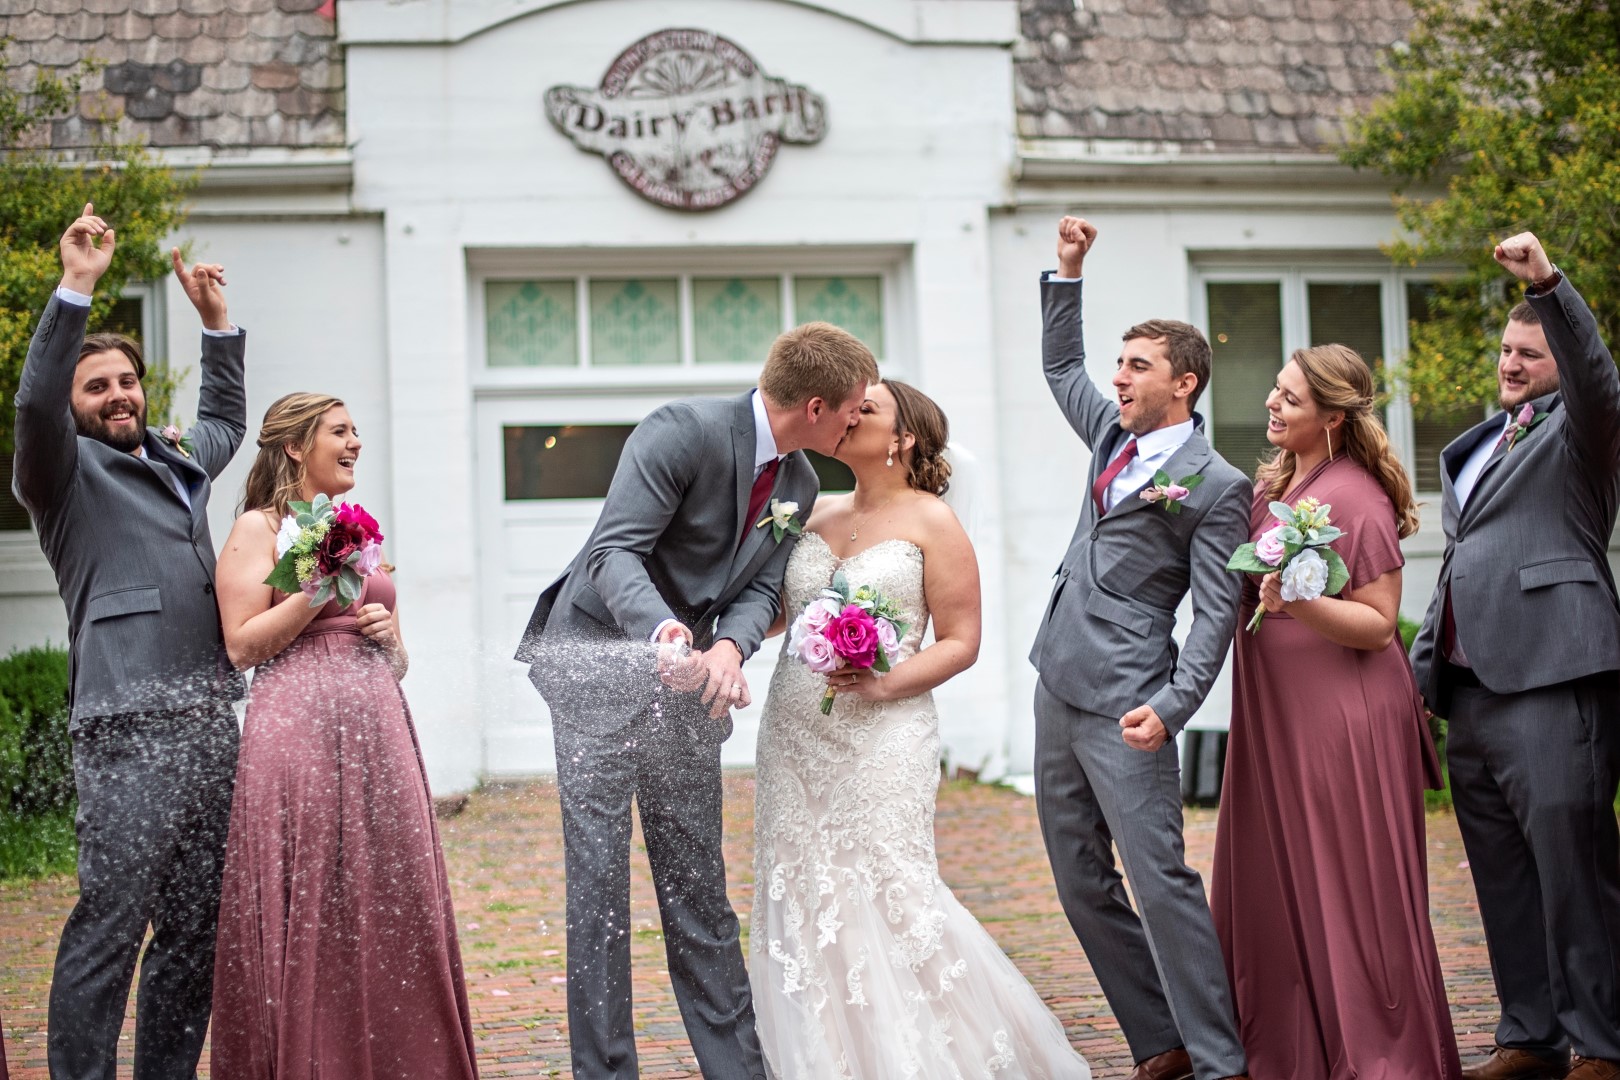 Courtney & Matt Dairy Barn Wedding May 2019_23 (Large).jpg